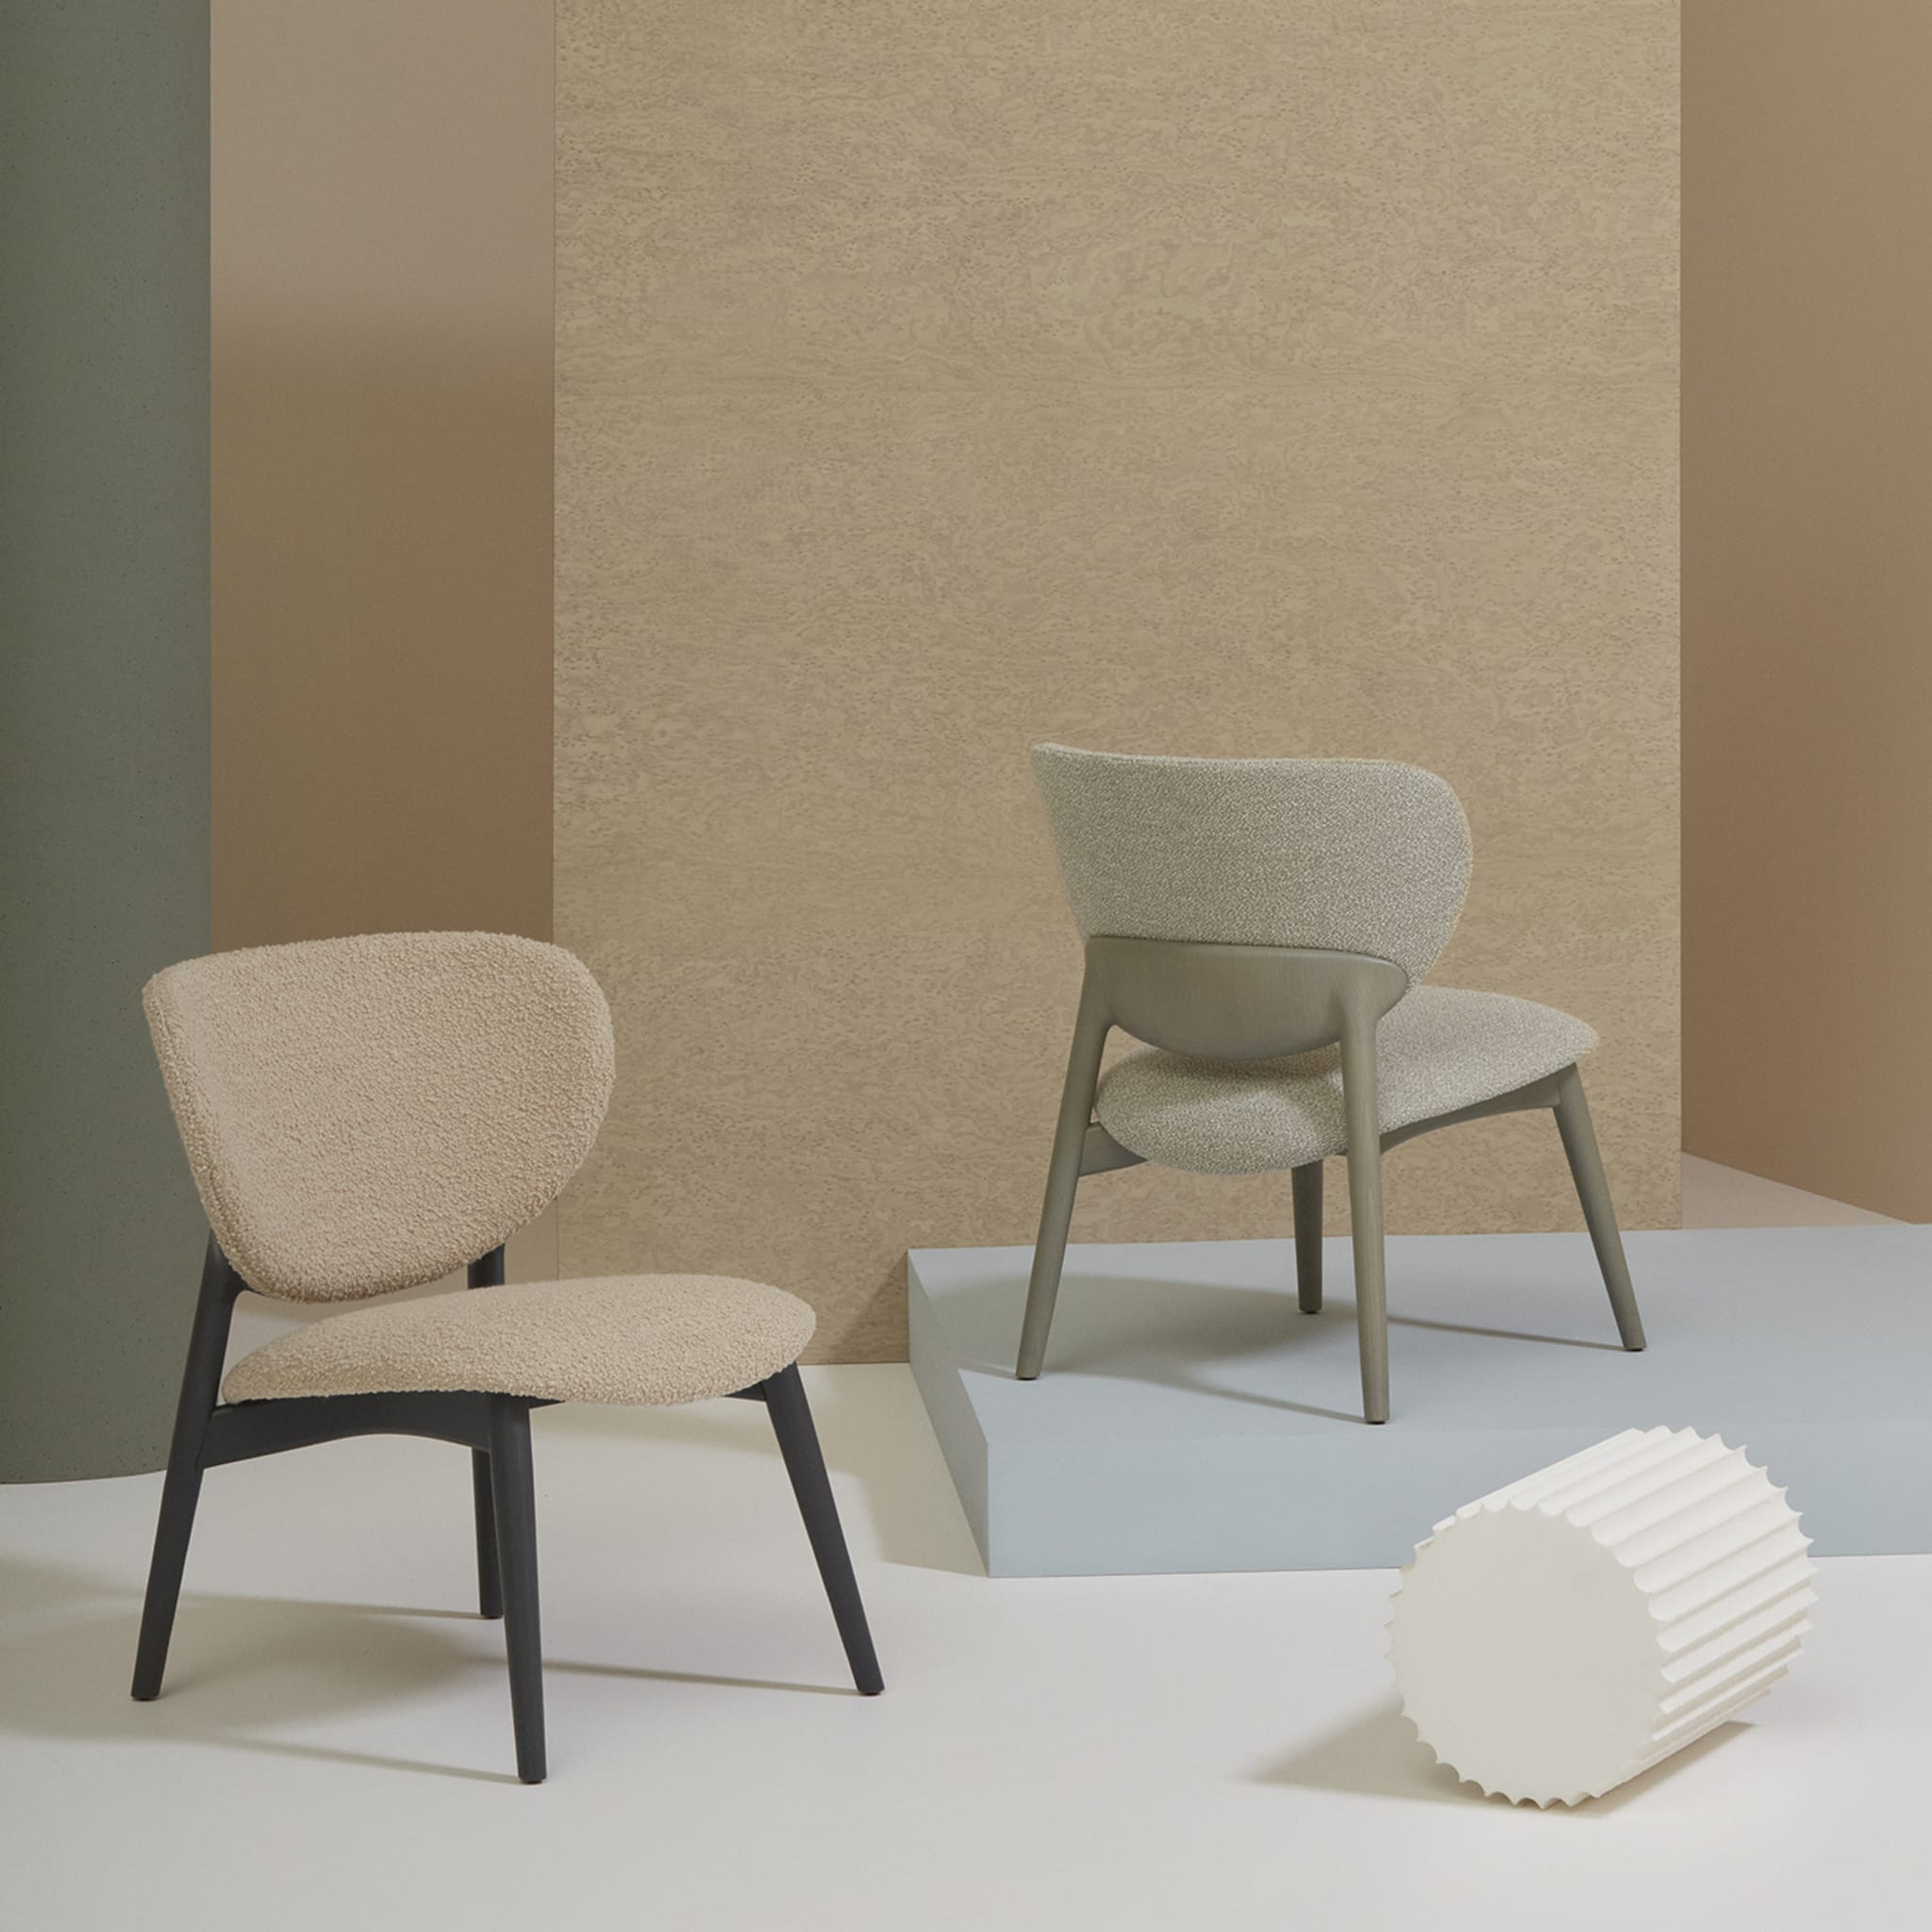 Fleuron 203 Gray Ash Lounge Chair by Constance Guisset - Alternative view 3